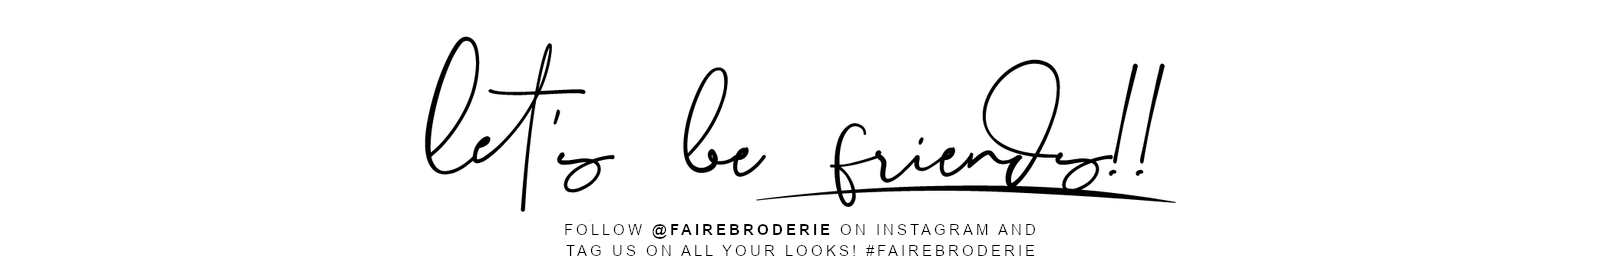 follow faire broderie on instagram